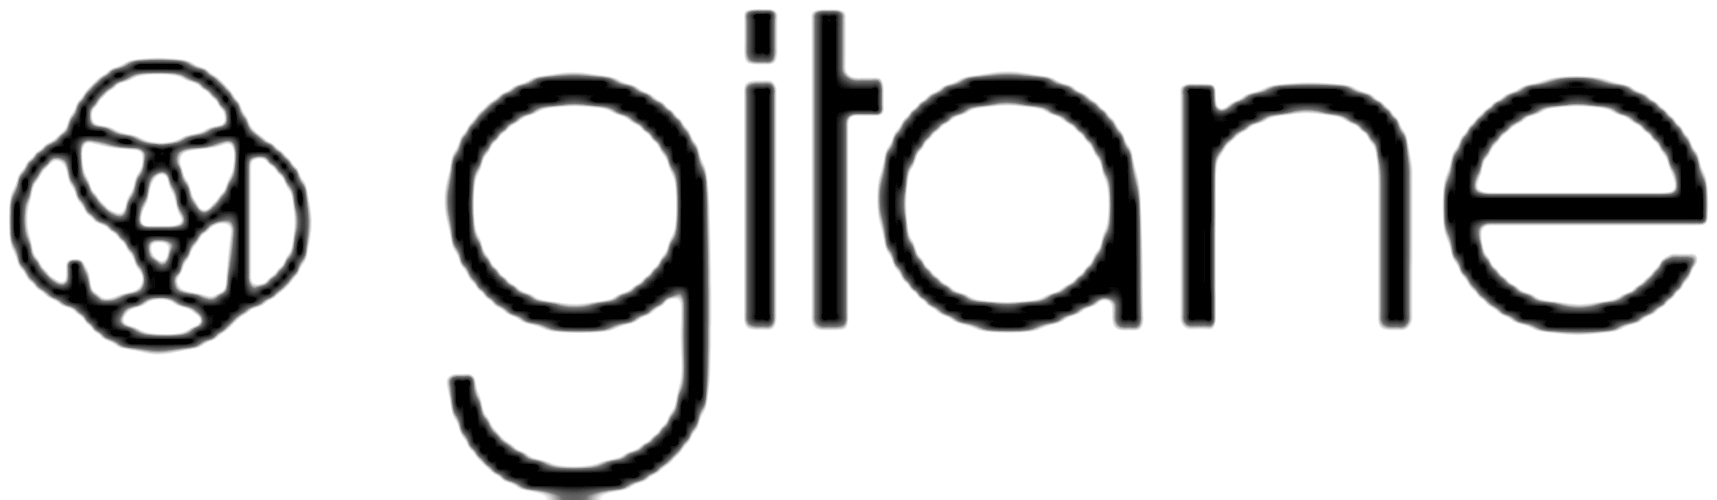 Logo de la marque Gitane